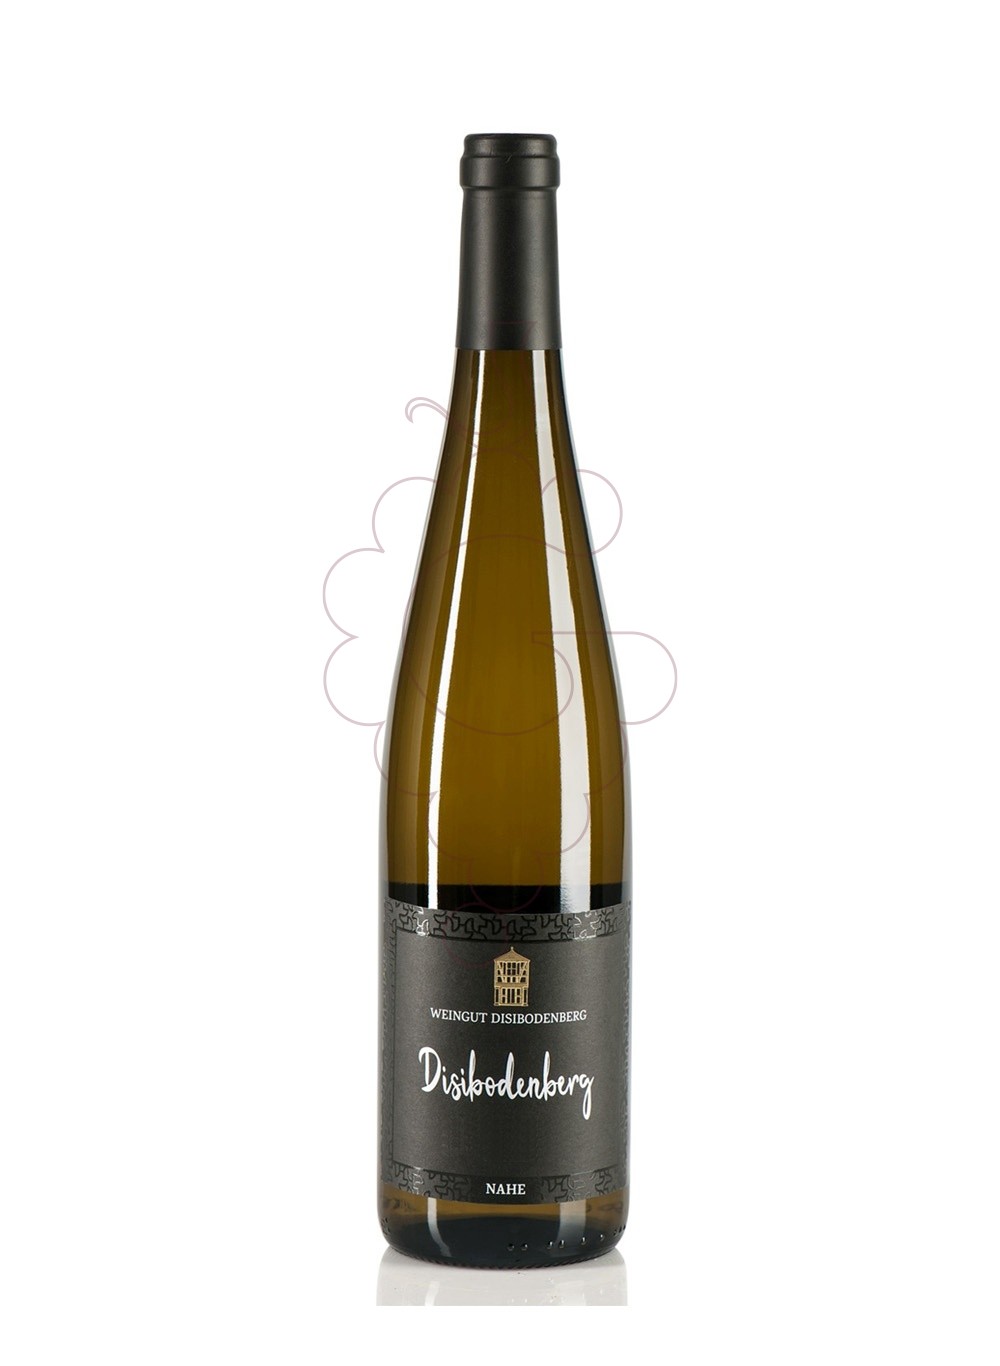 Photo Disibodenberg Riesling Trocken LvR white wine